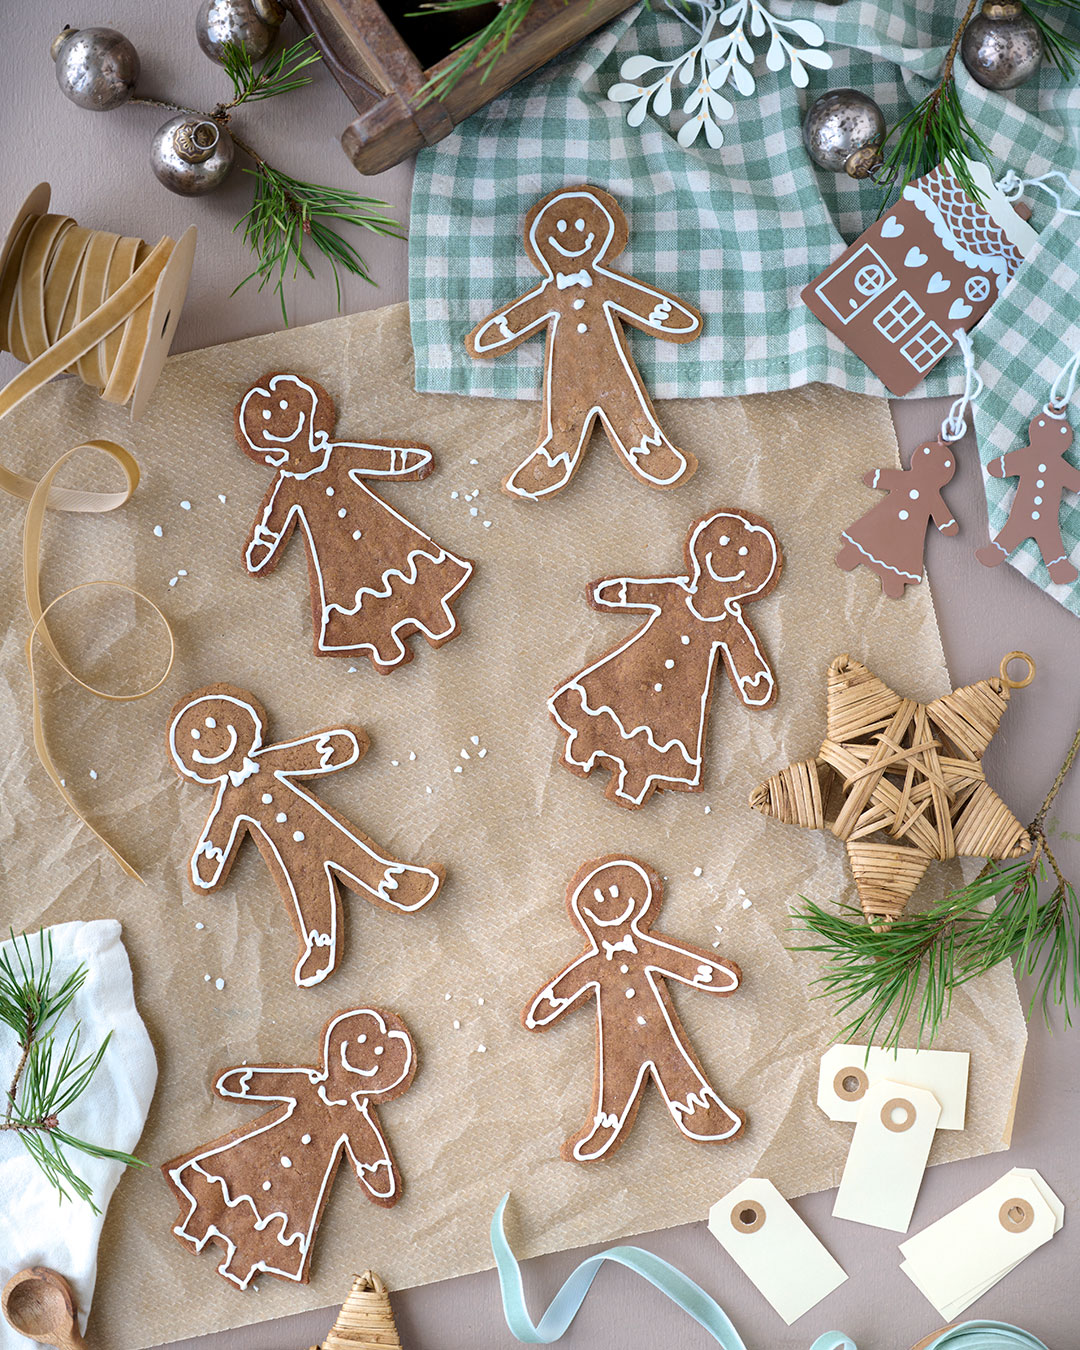 RECIPE - Gingerbread cookies